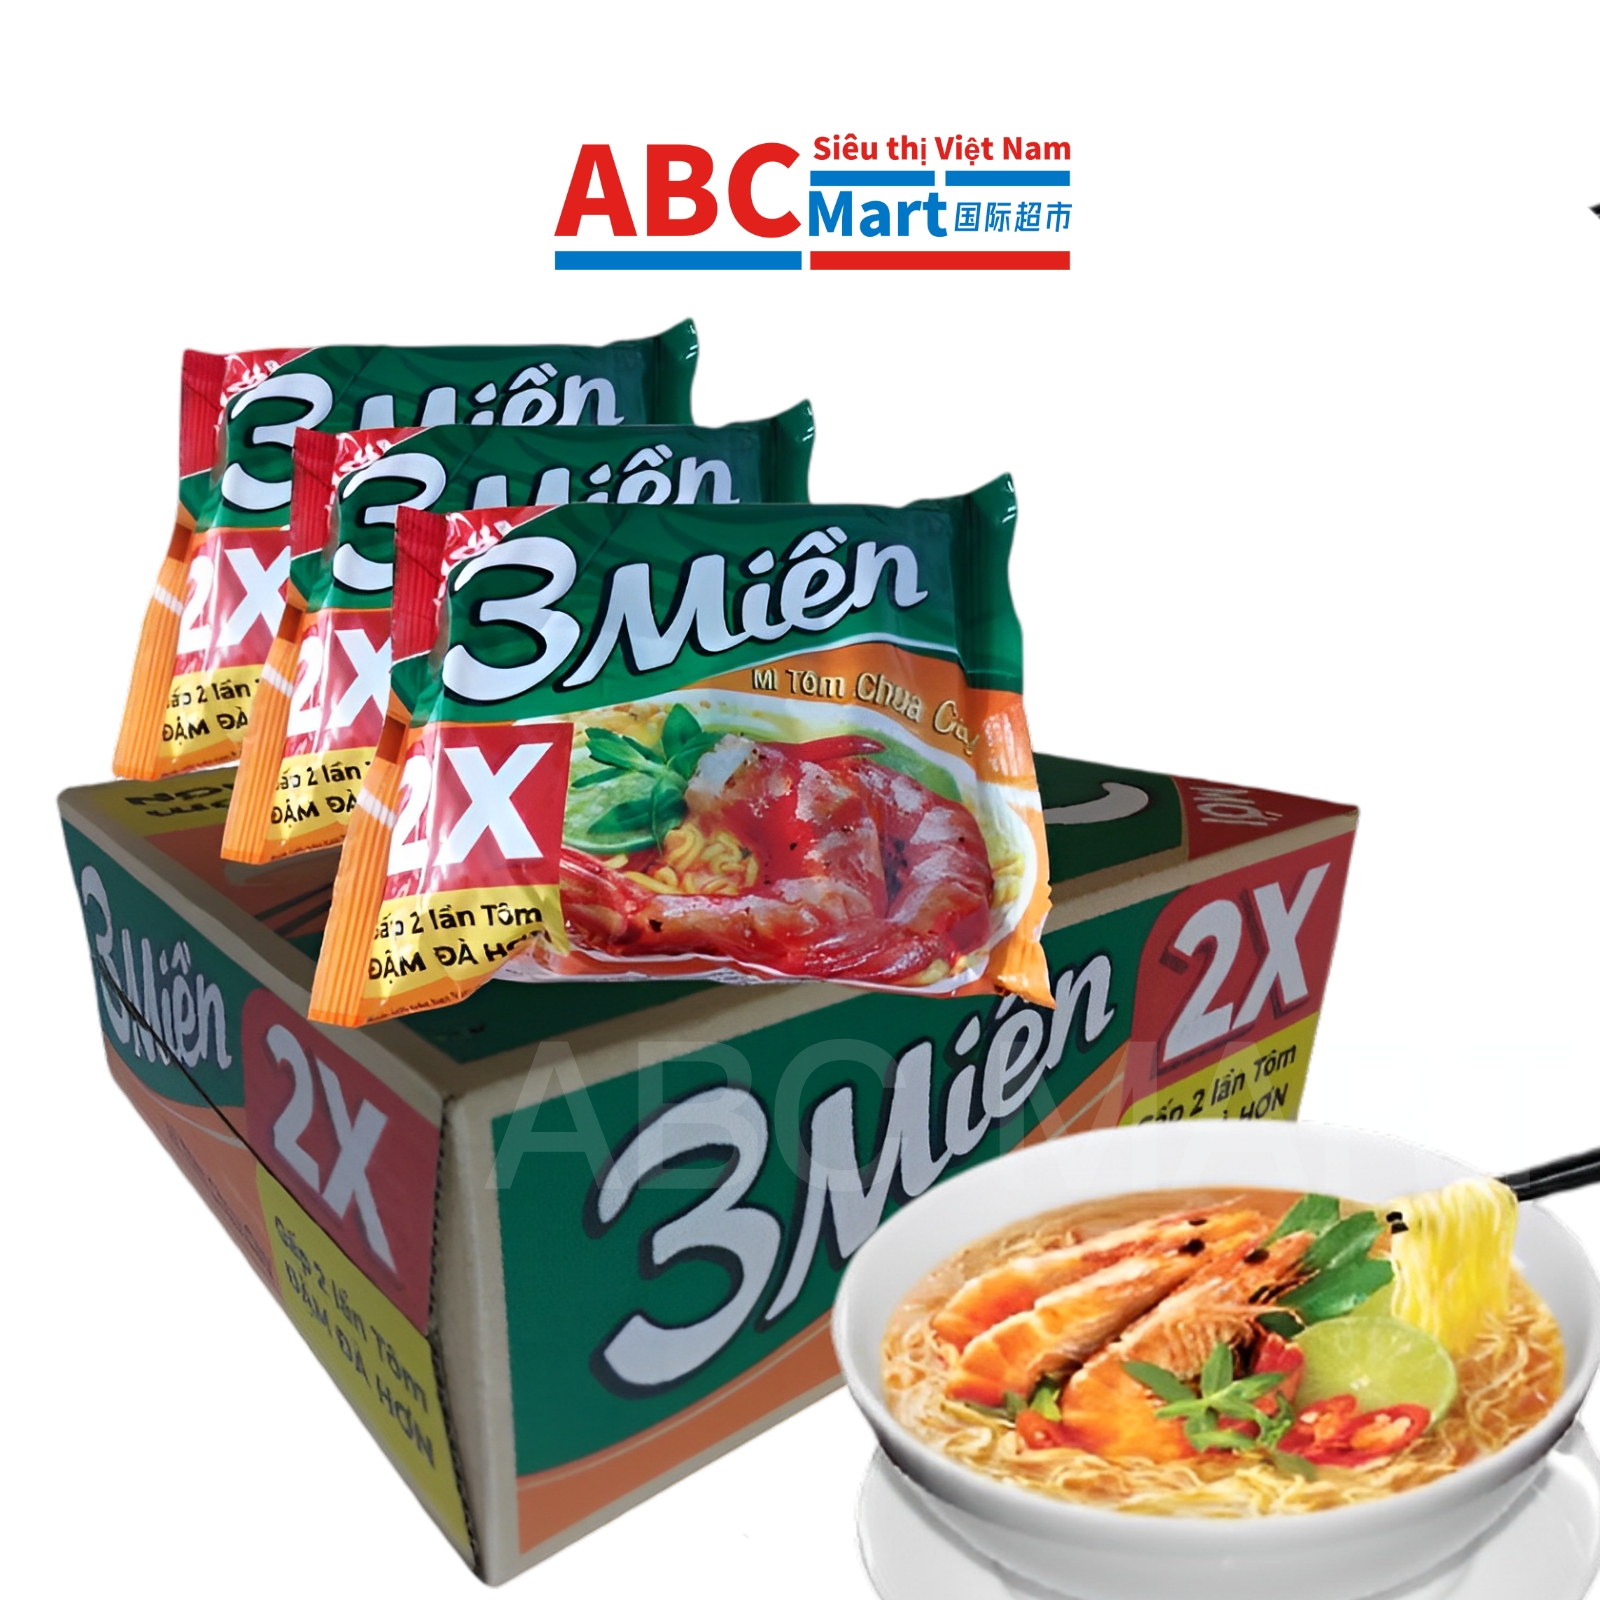 【Việt Nam-Mì 3 Miền chua cay 2x 65g】酸虾面2x-ABCMart 国际超市